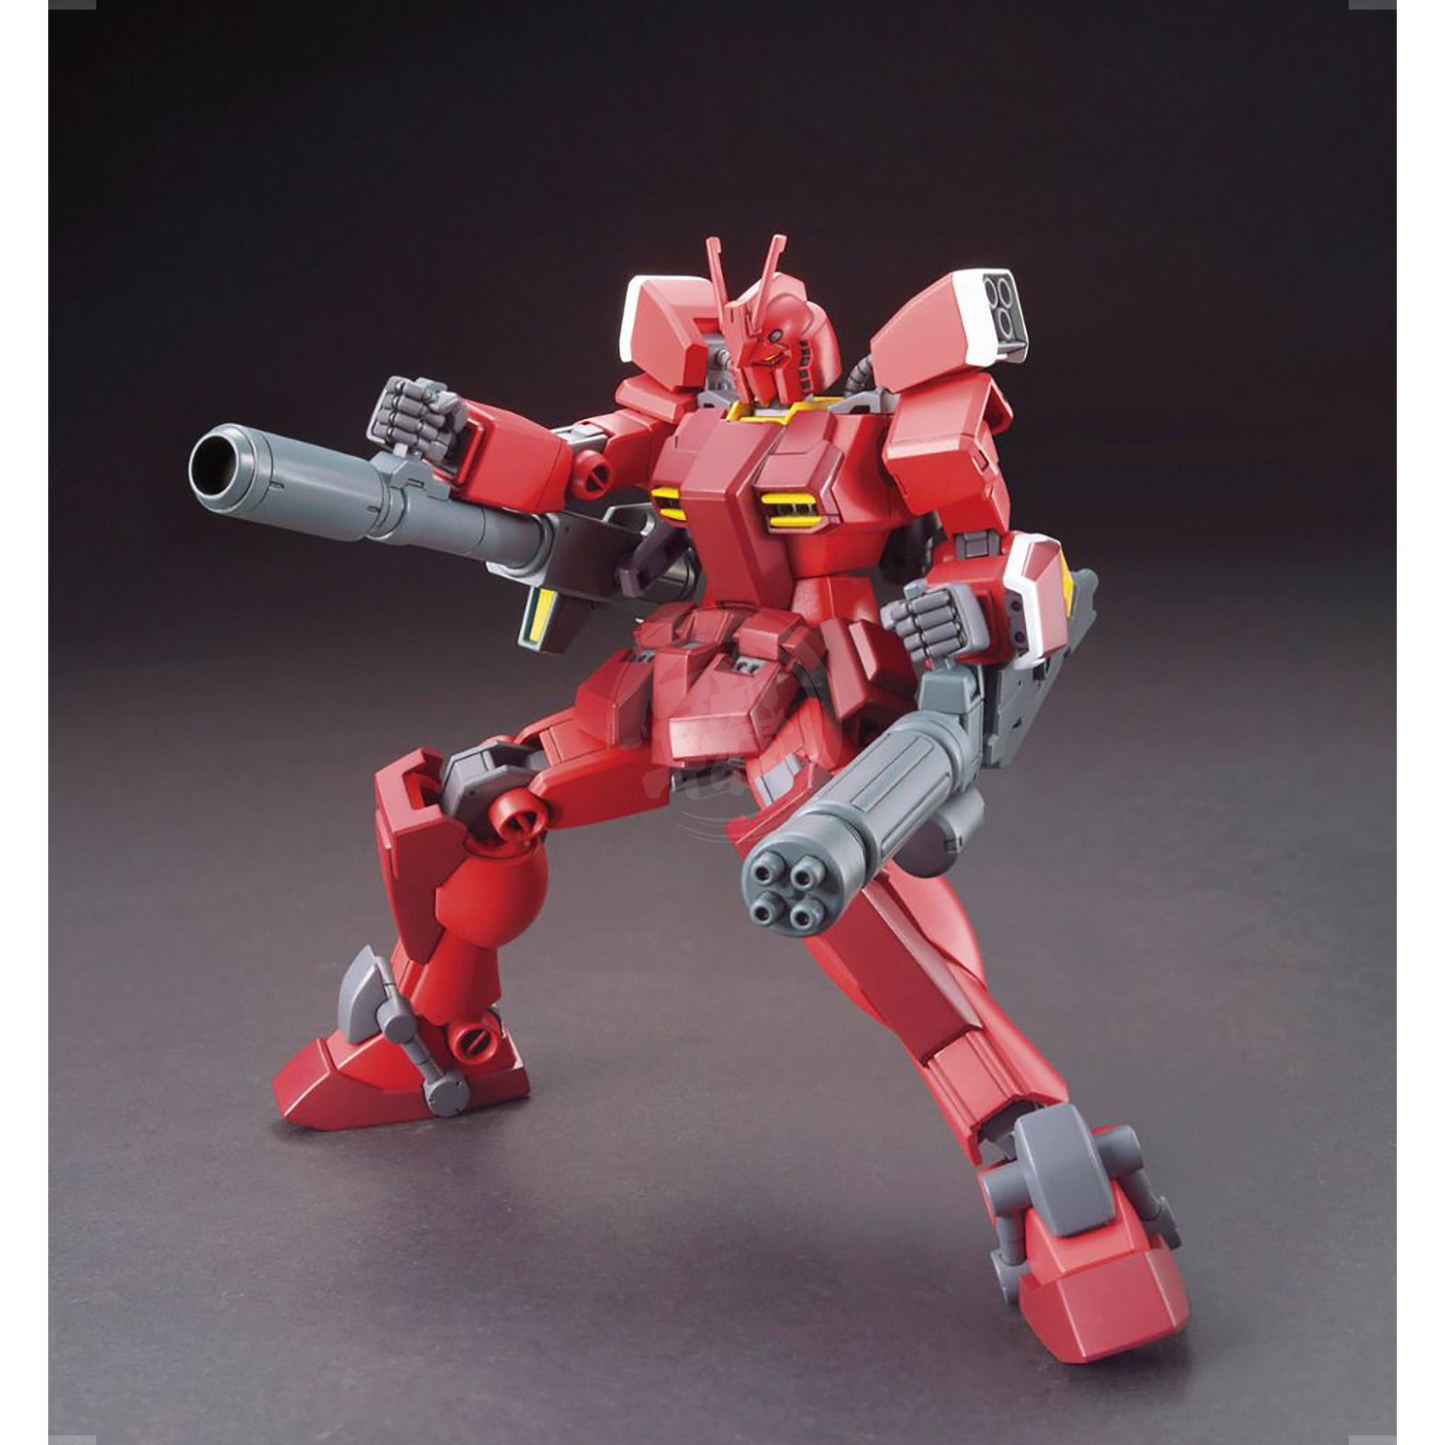 Bandai - HG Gundam Amazing Red Warrior - ShokuninGunpla